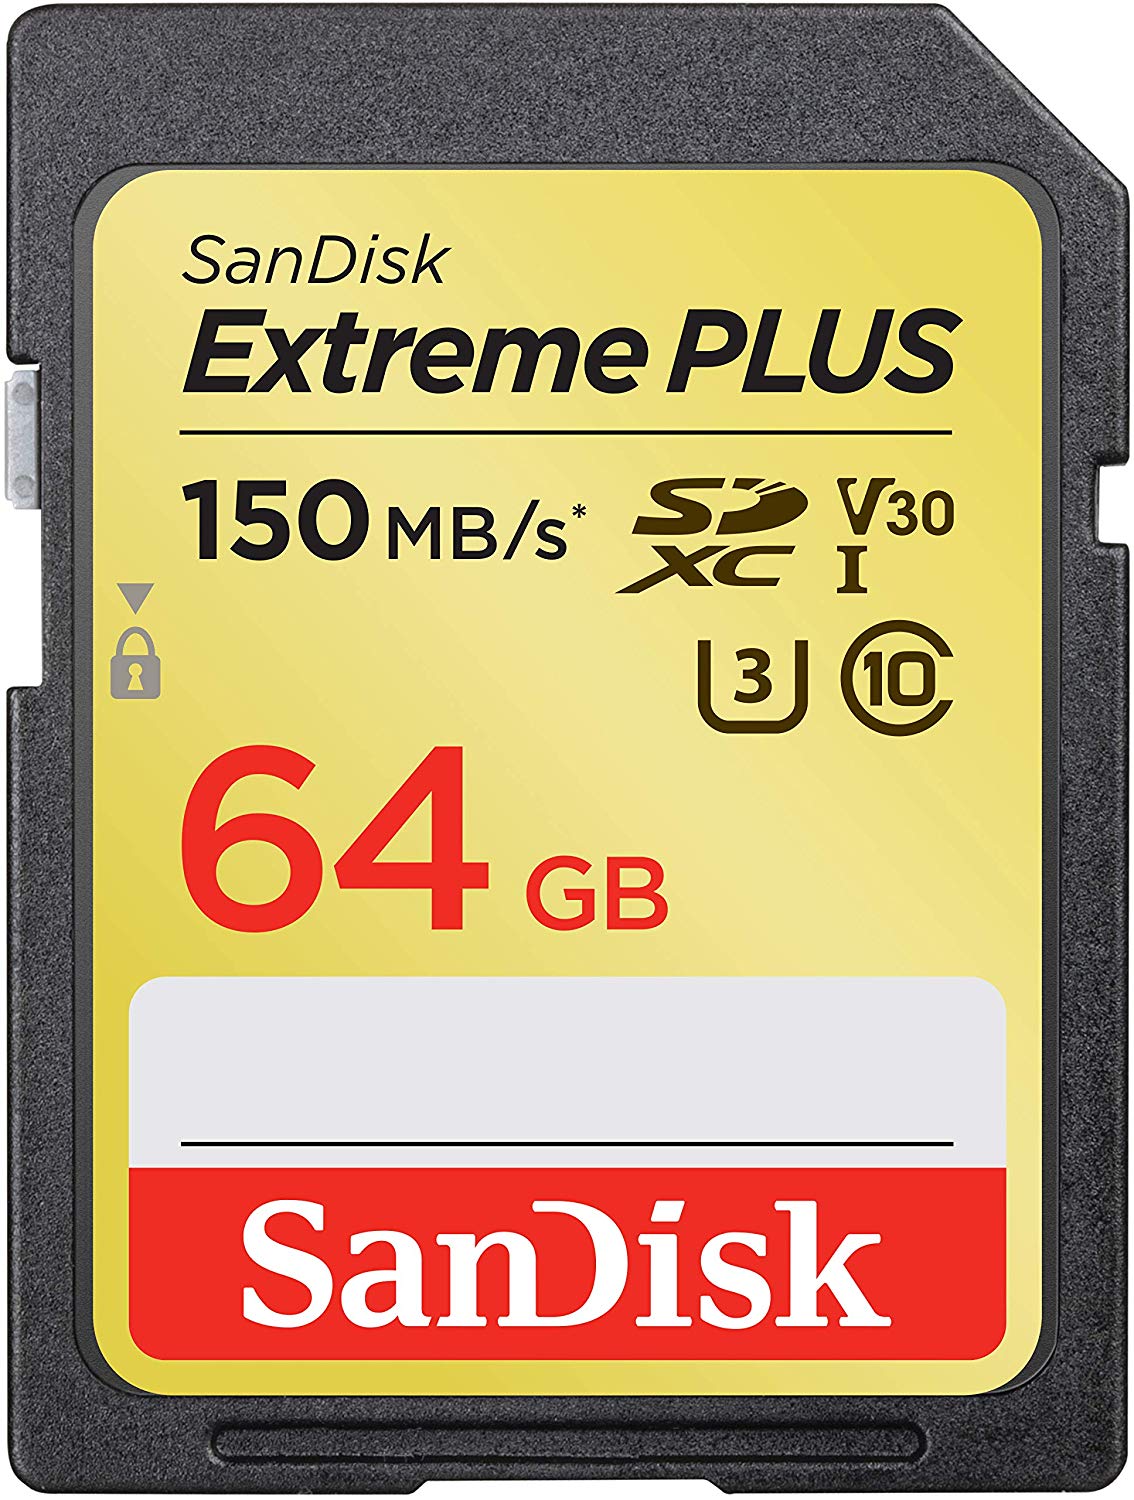 64GB Sandisk Extreme SDXC